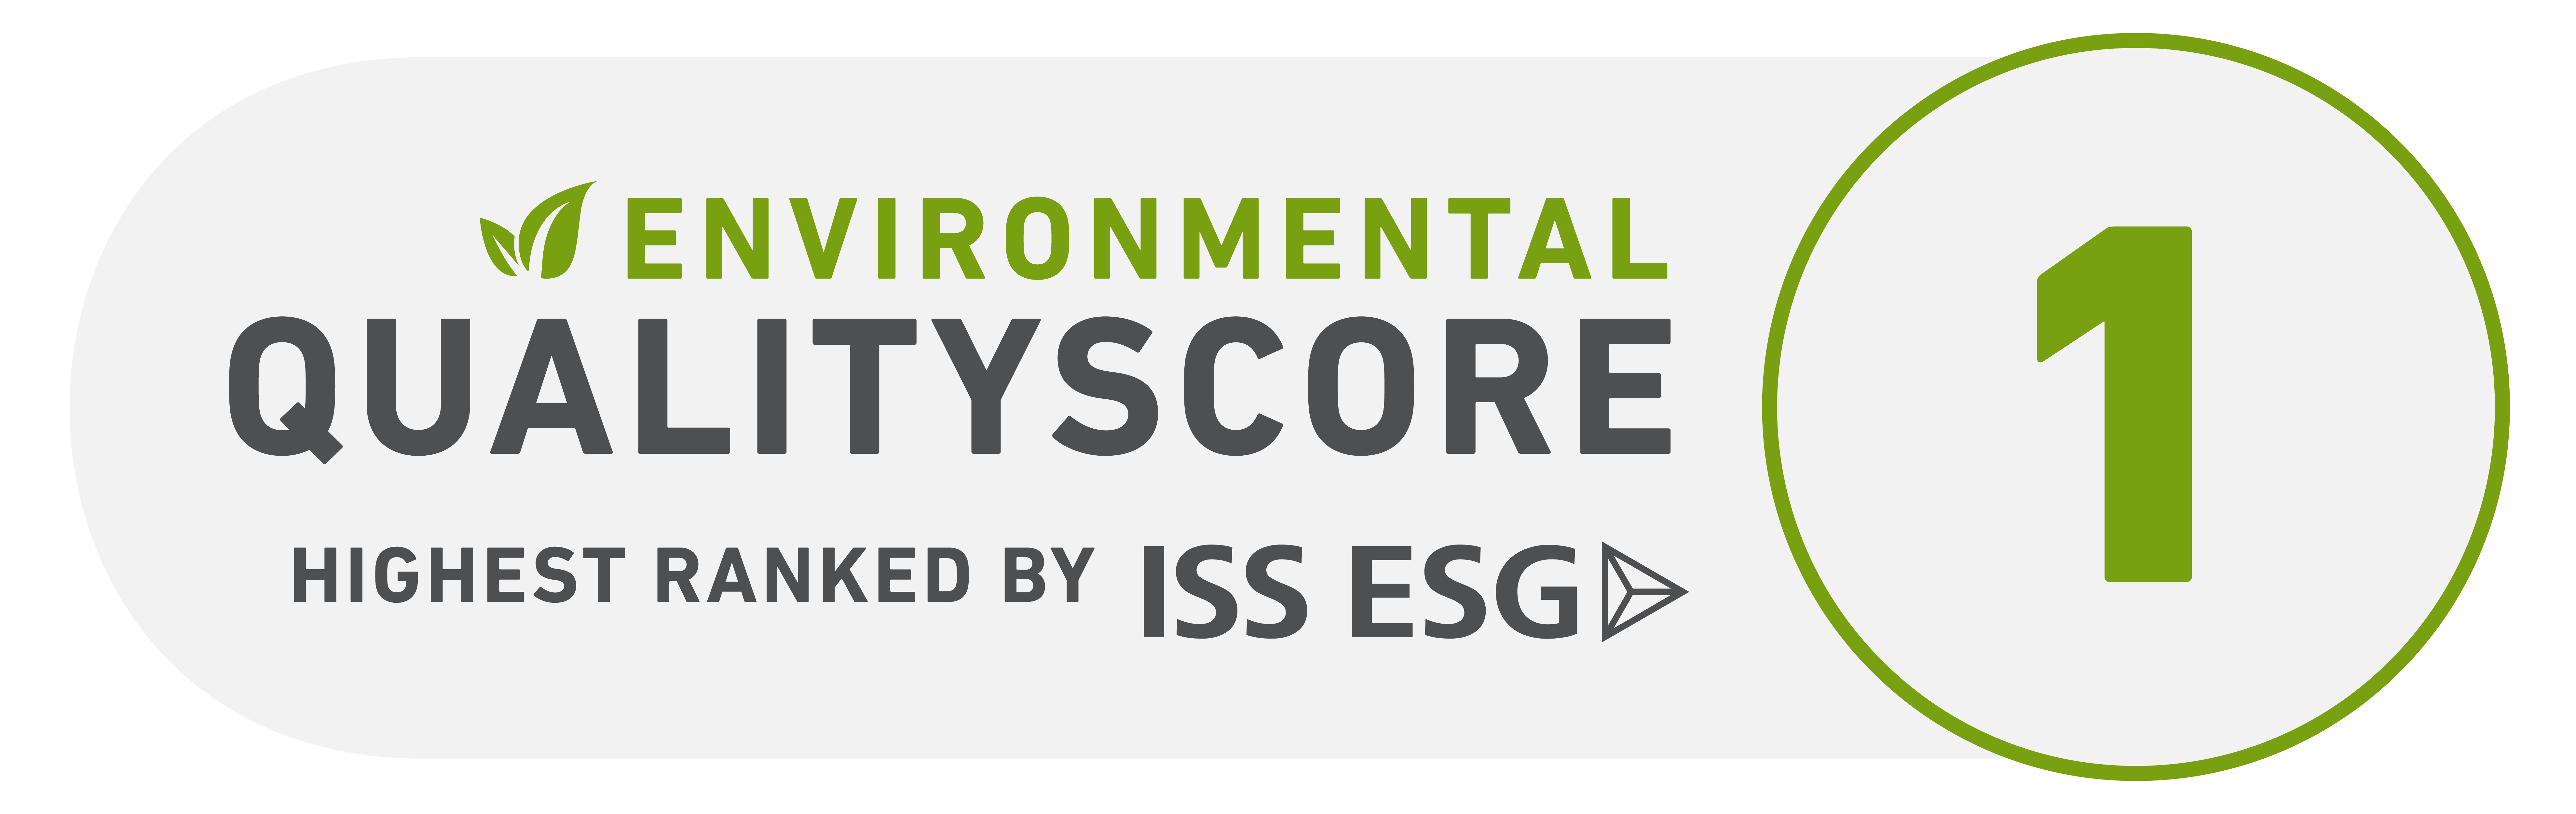 quality-score-badge-environmental